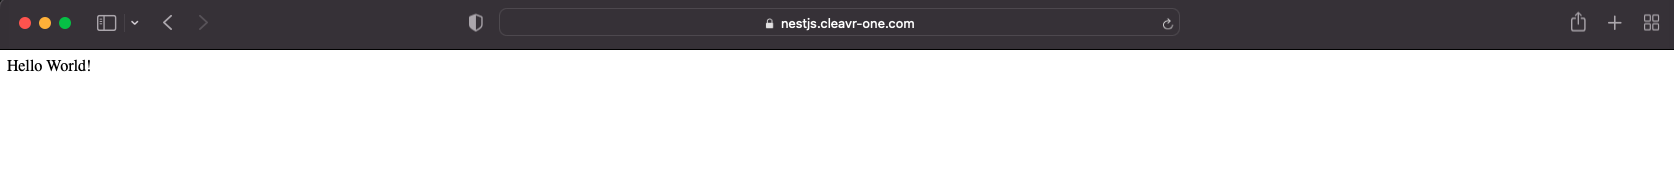 NestJS Deployed with Cleavr